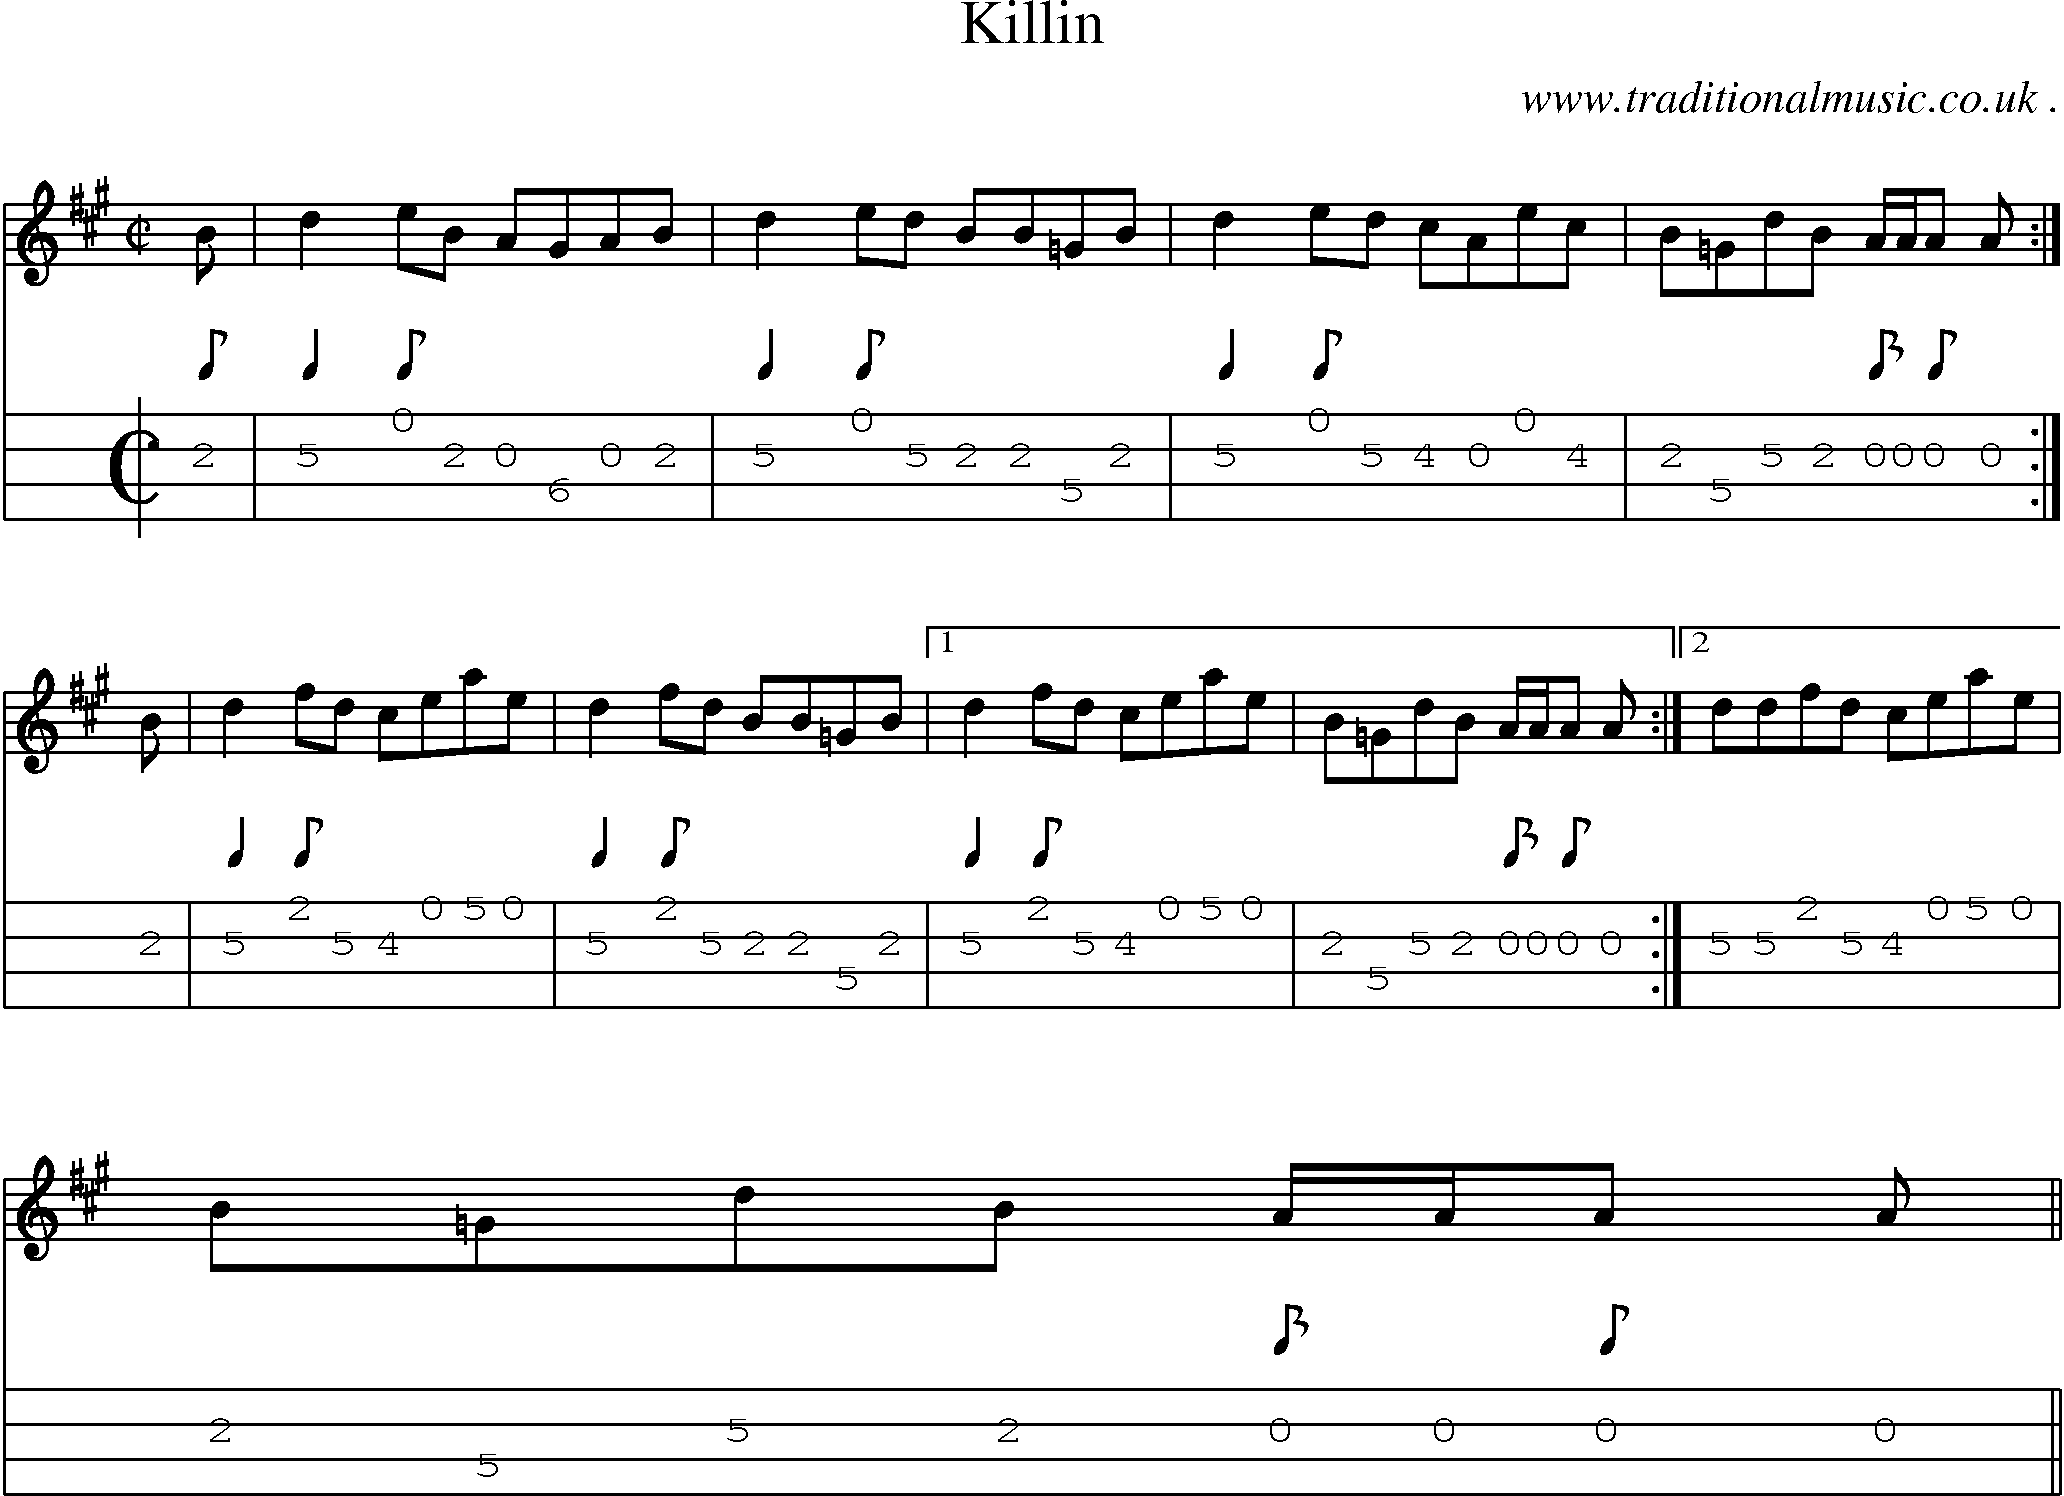 Sheet-music  score, Chords and Mandolin Tabs for Killin